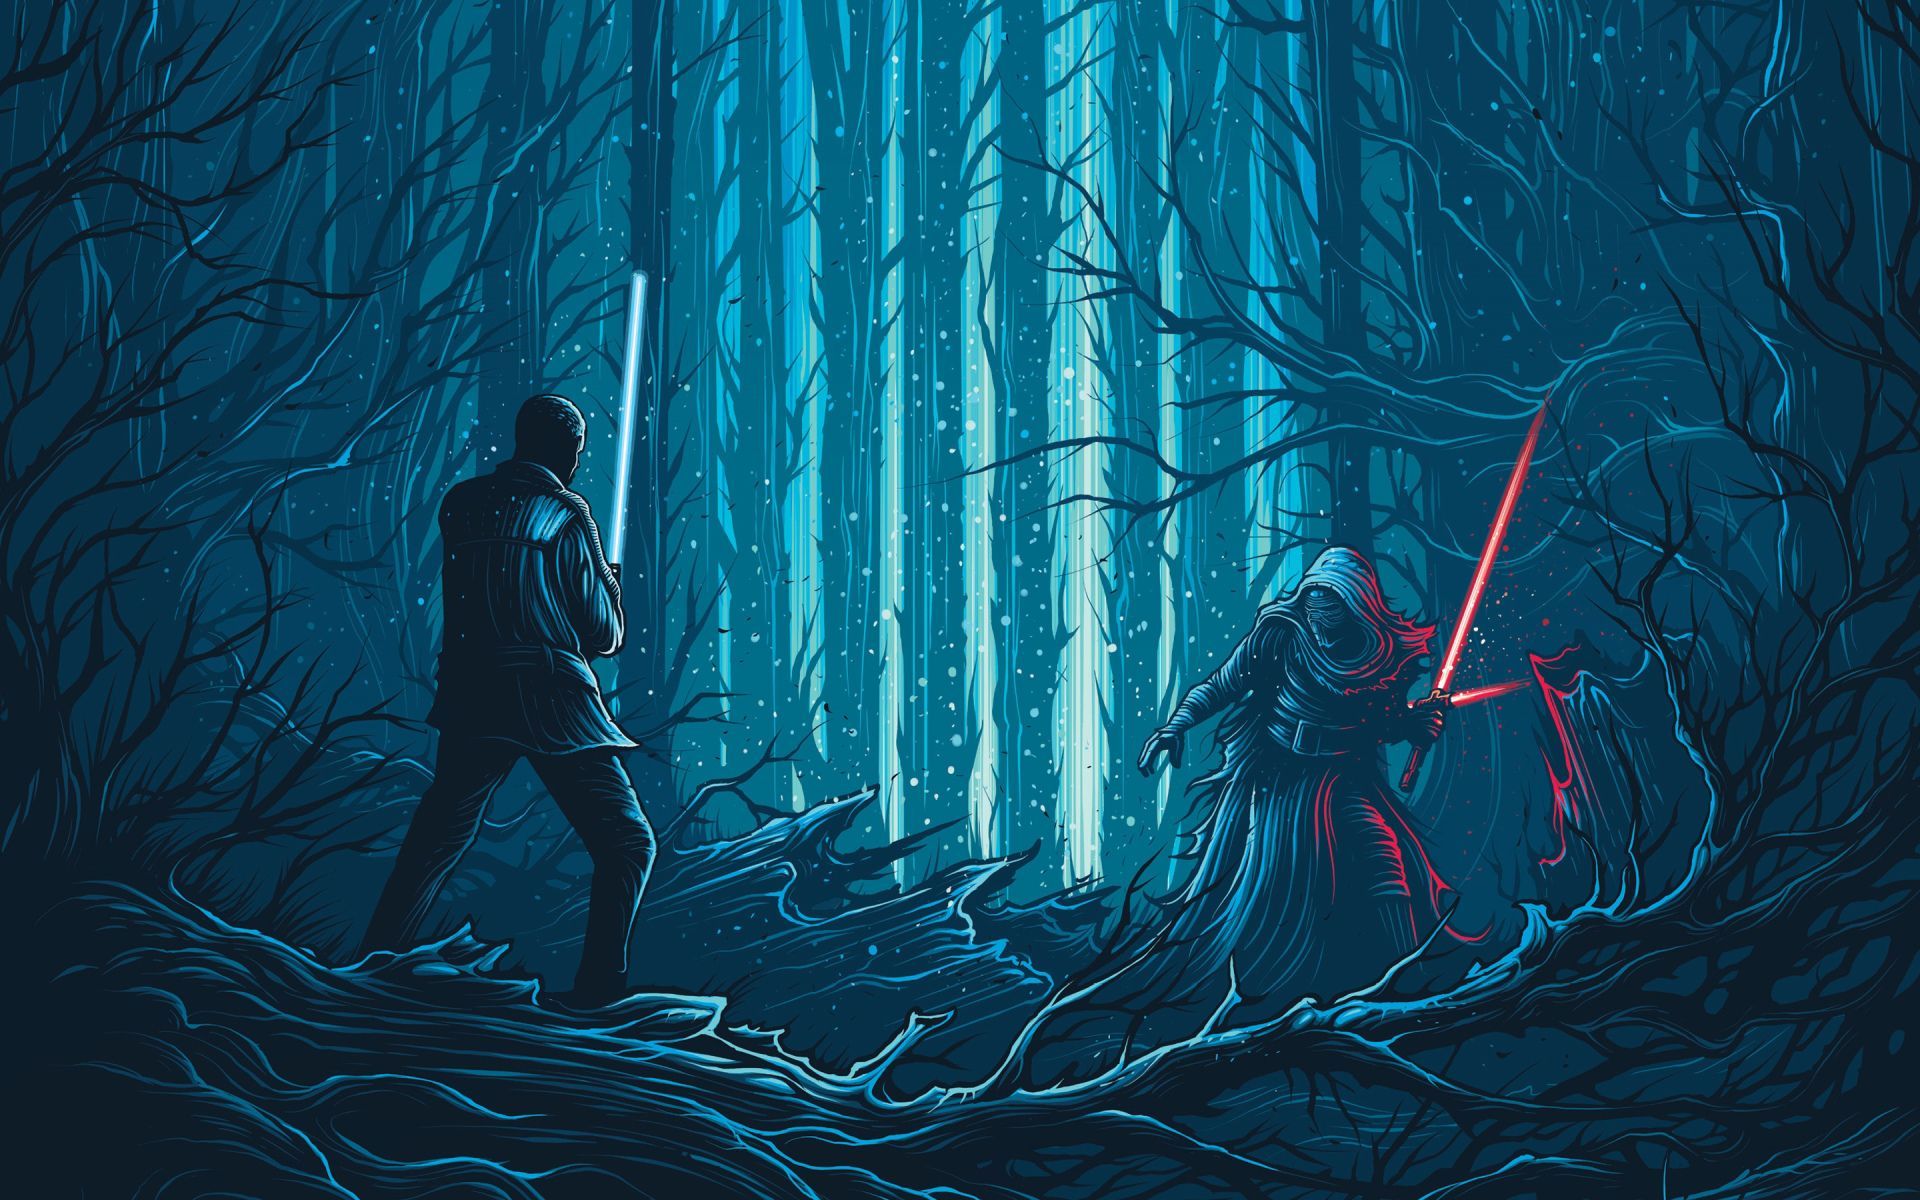 Star Wars Episode VII Force Awakens Wallpaper 092. Star wars background, Star wars wallpaper, Star wars illustration